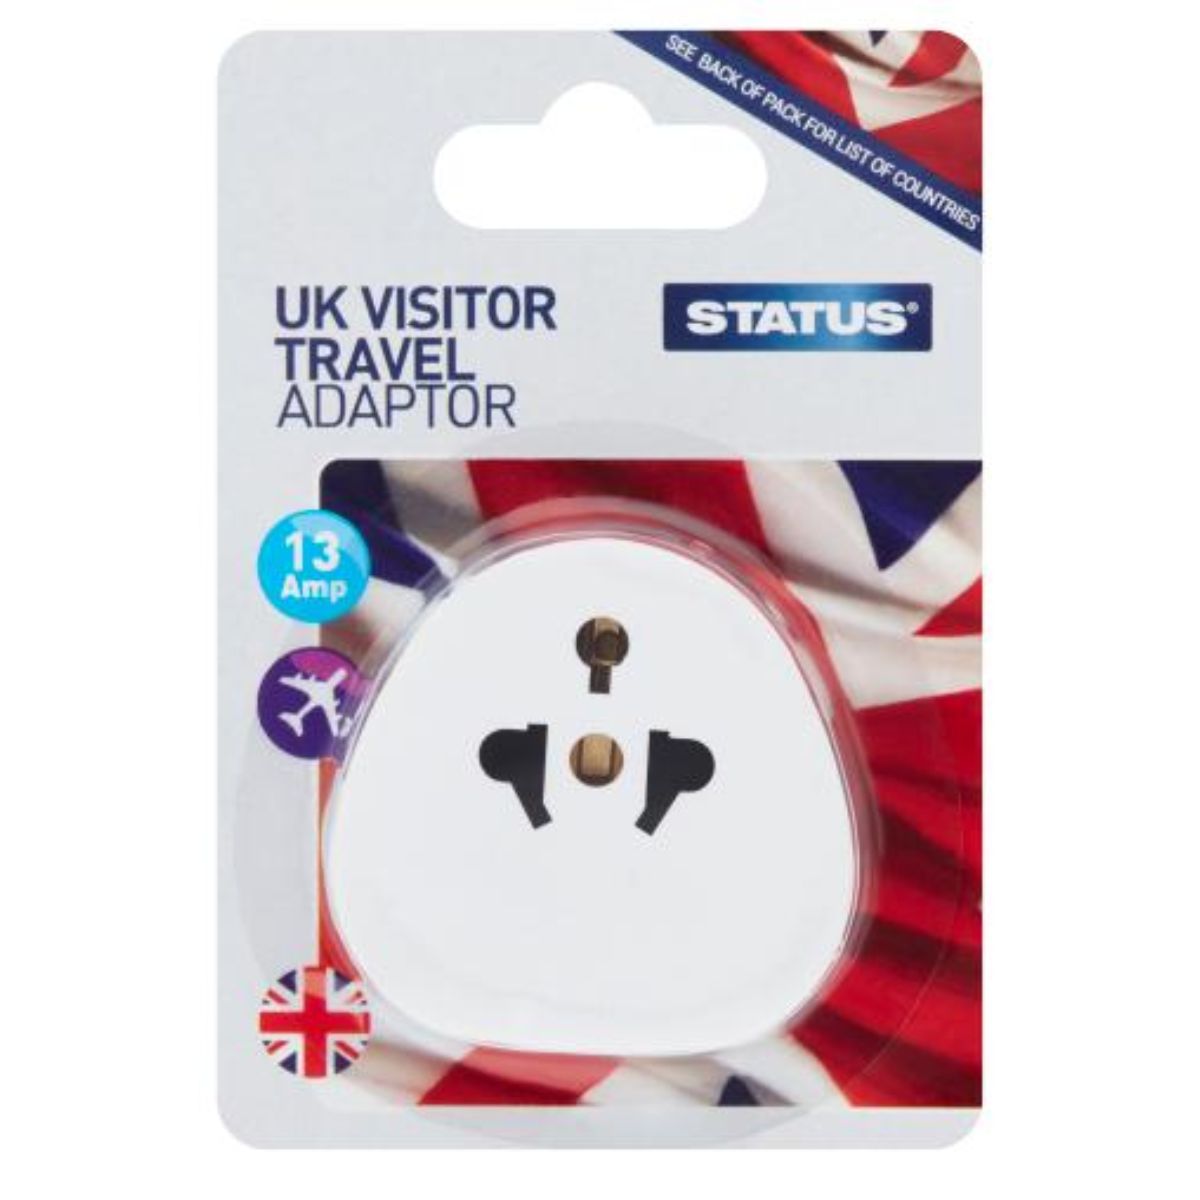 Status - UK Visitor Travel Adaptor 13amp - 1pcs uk visitor travel adapter.